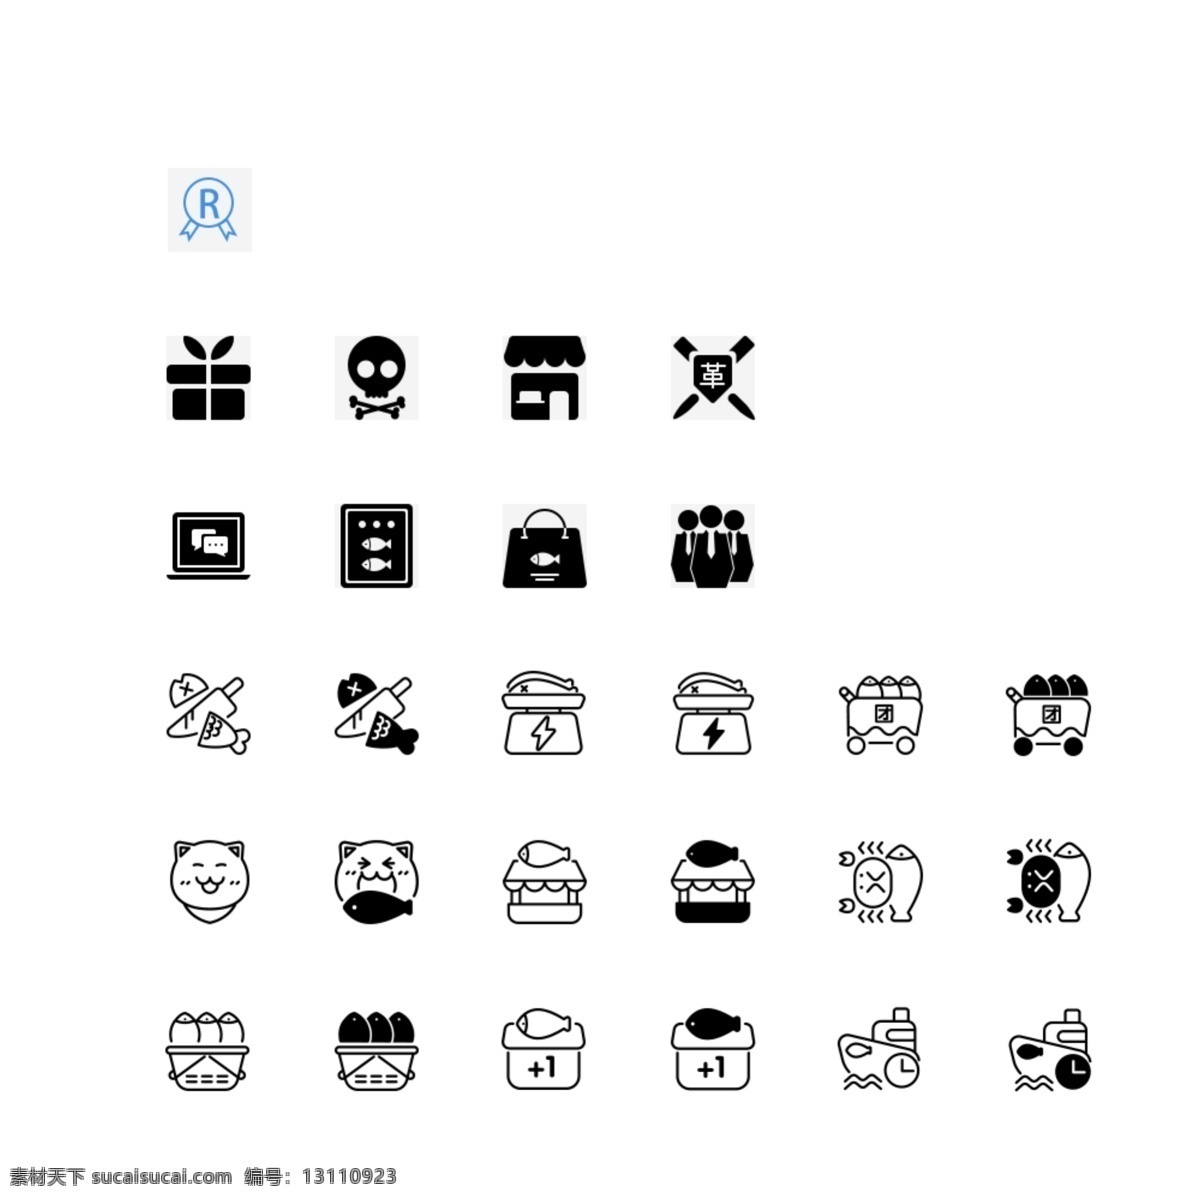 海鲜icon 海鲜 banner ui 网页 扁平 矢量 icon 图标 移动界面设计 客户端界面